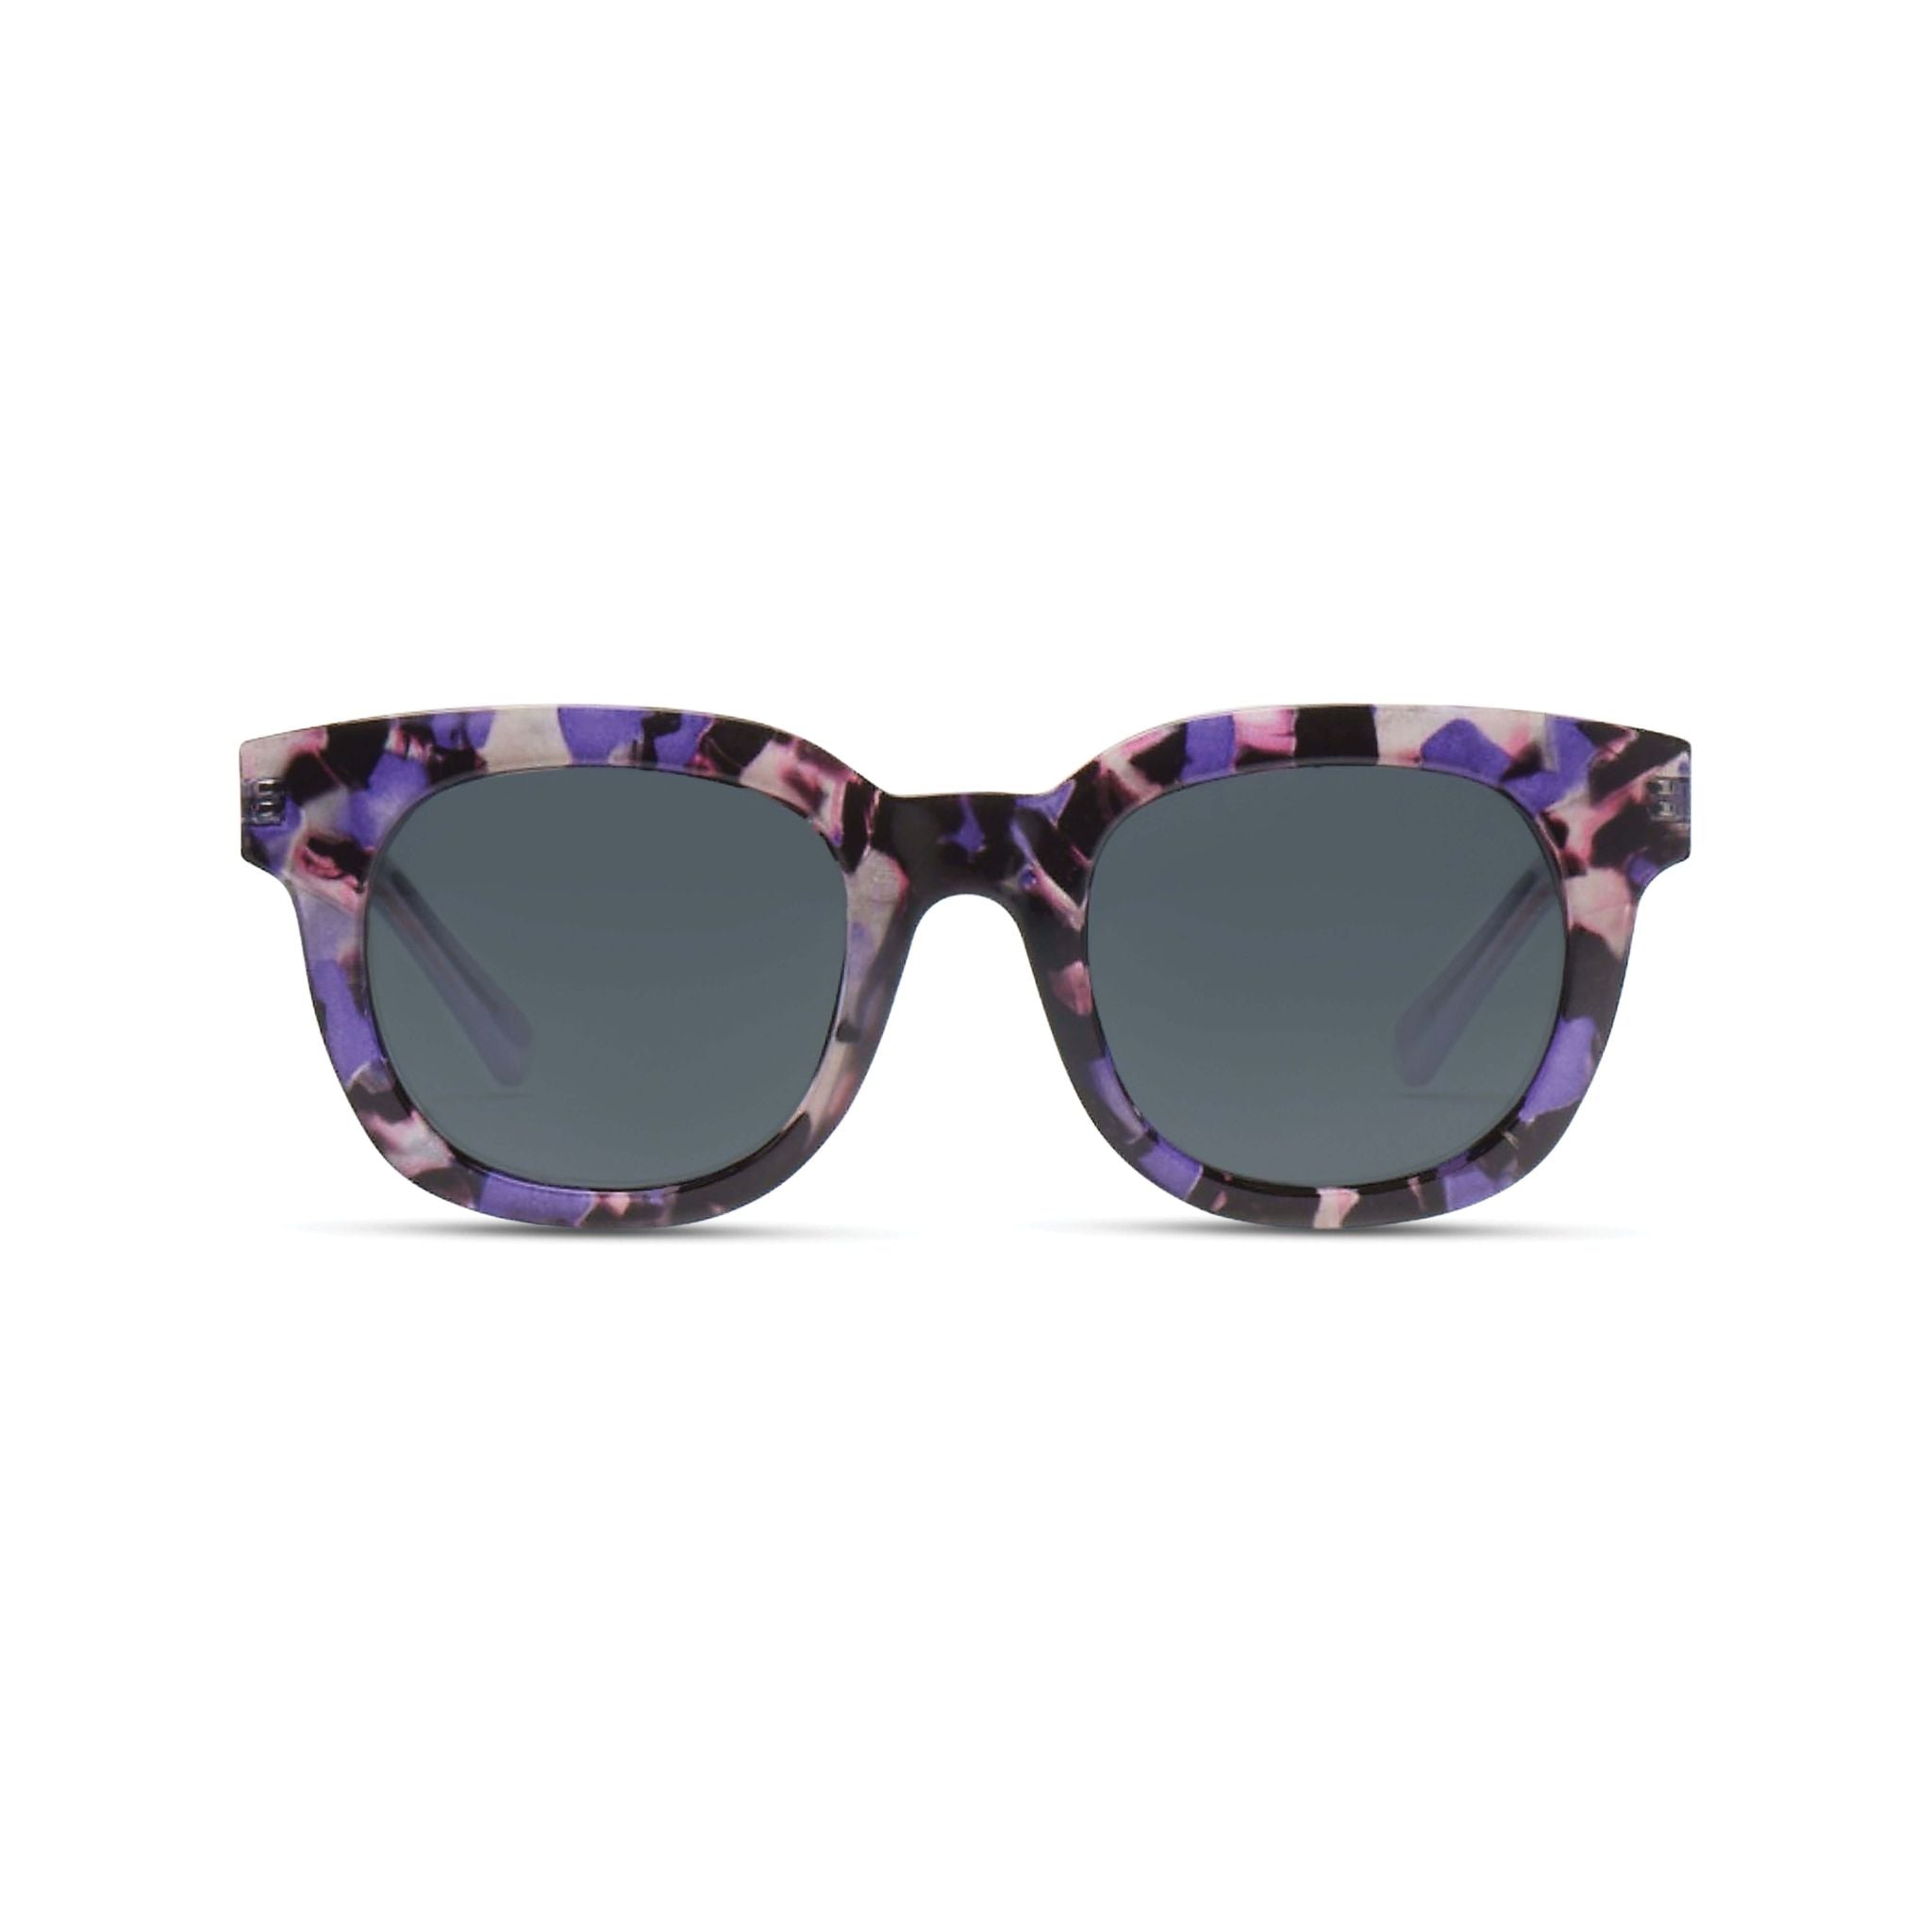 Road Trip (Sunglasses) - Purple Quartz / No Correction / None - Peepers ...